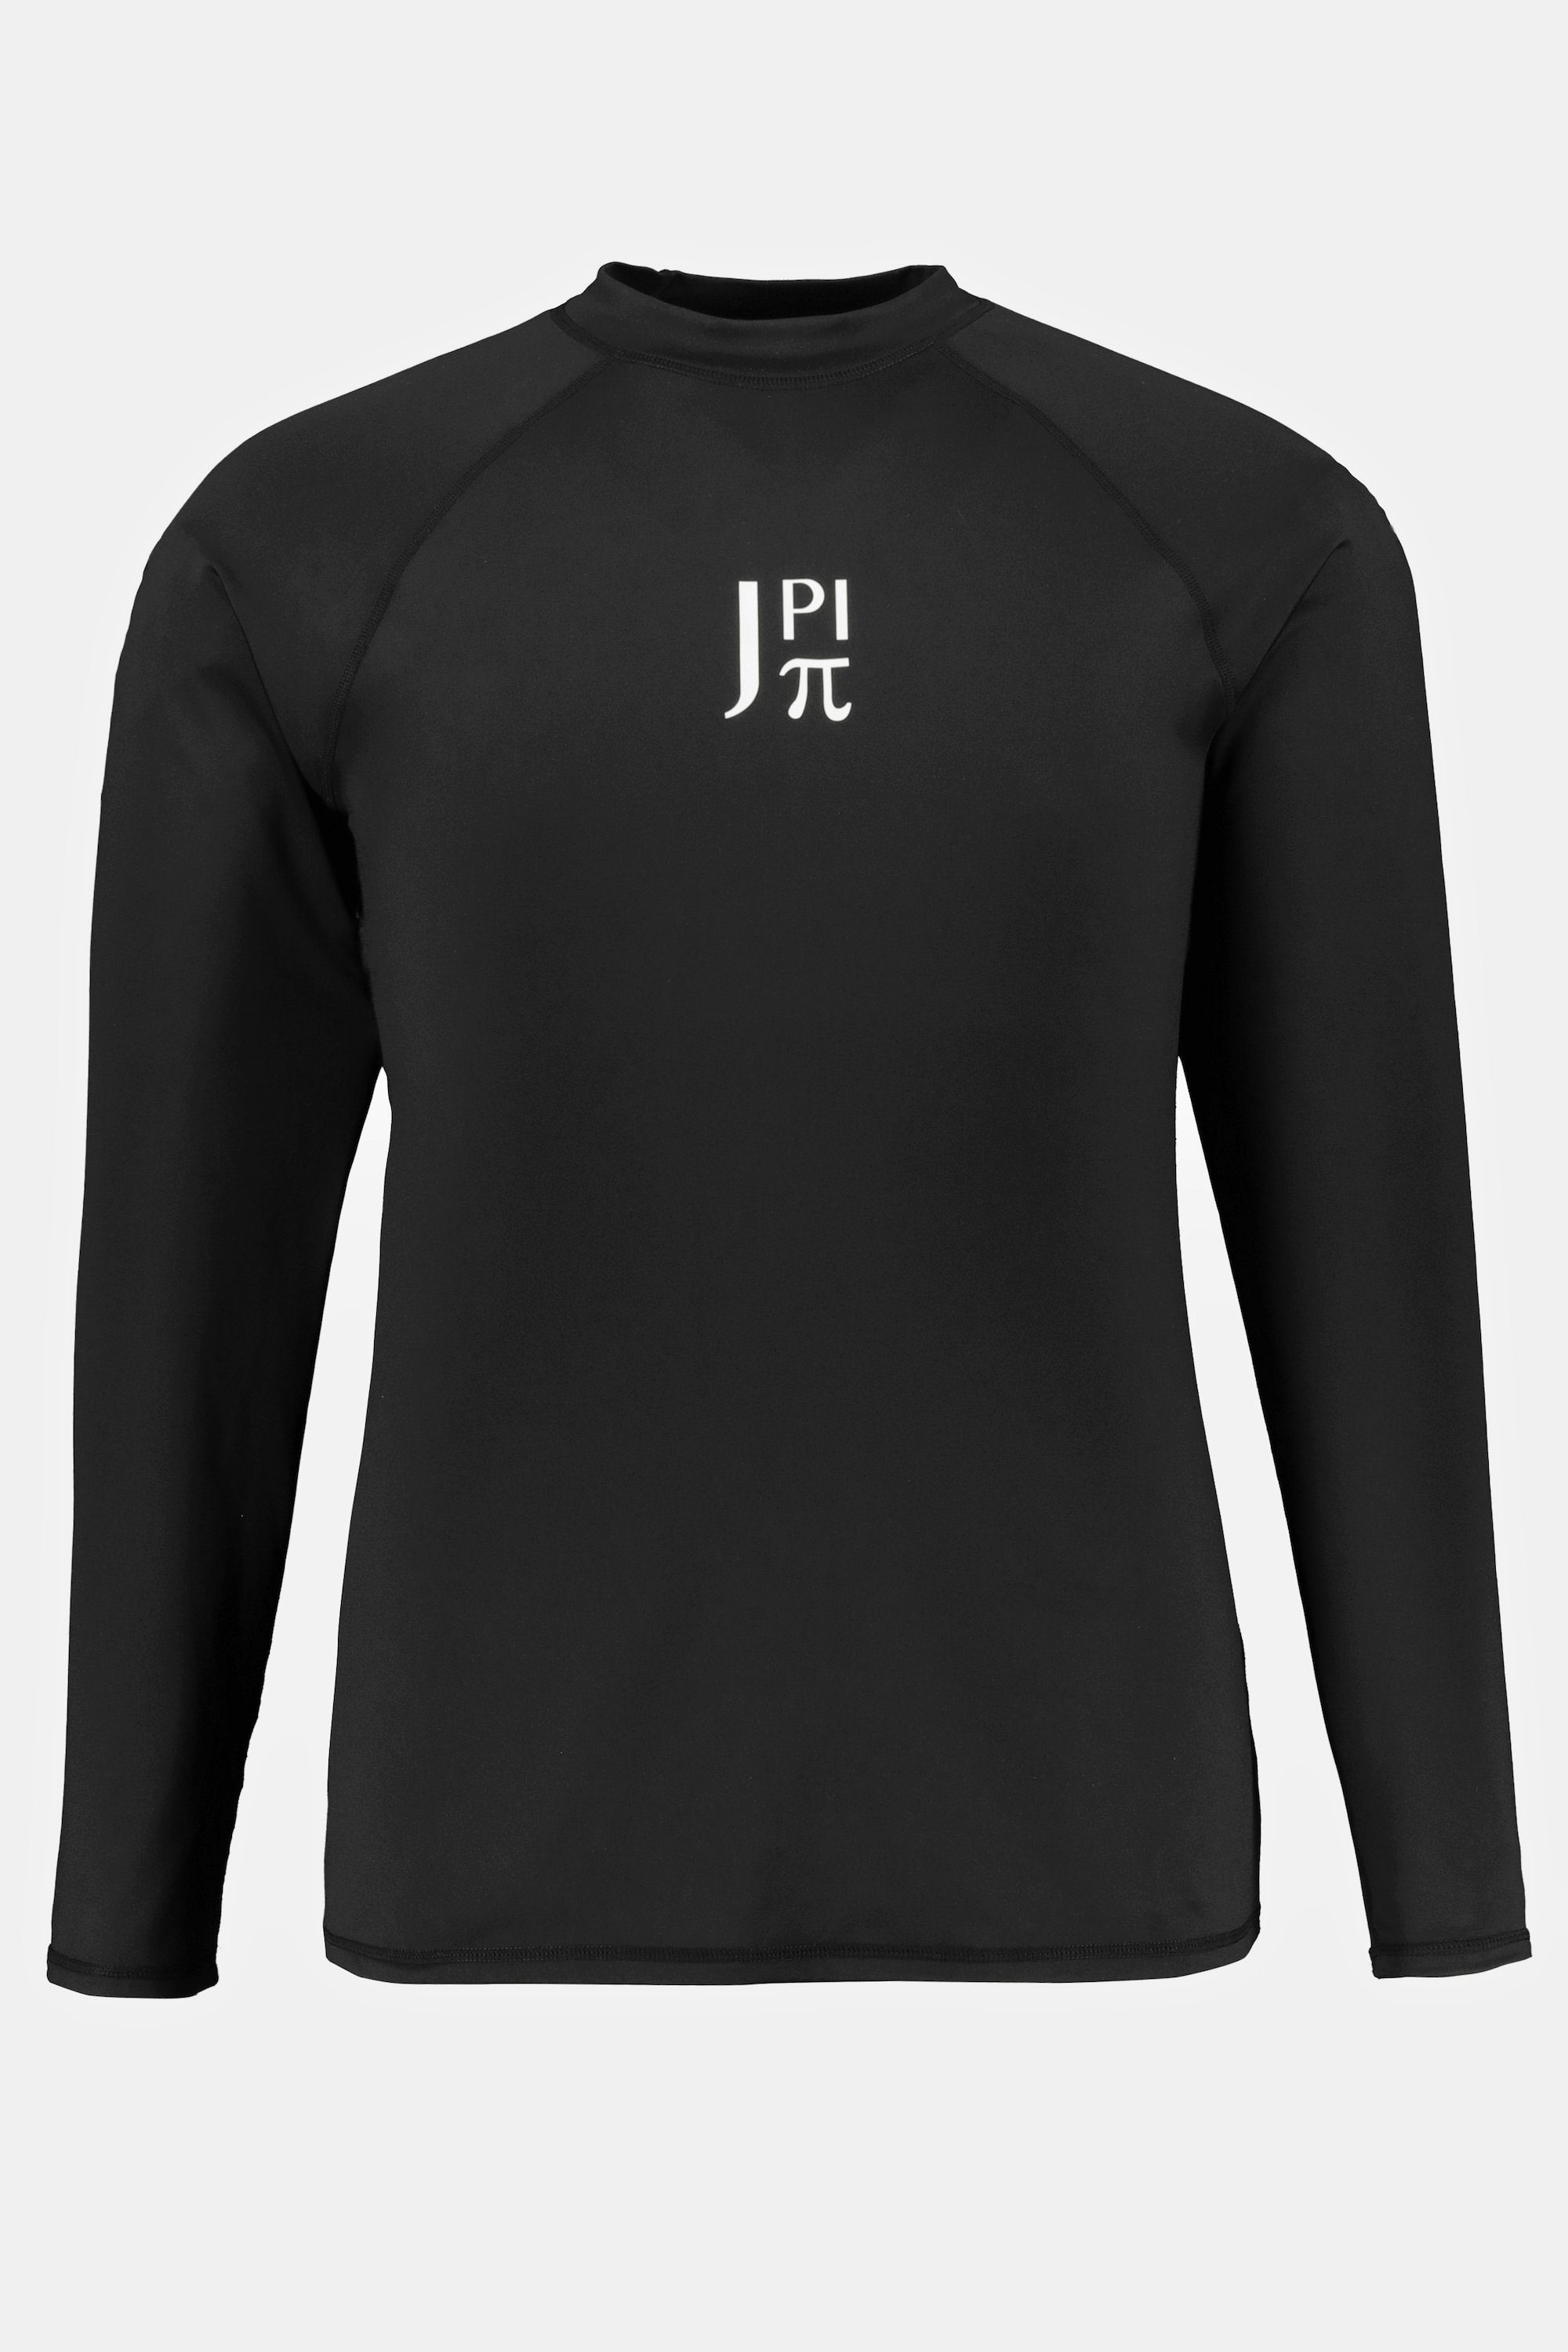 JP1880 UV-Schutz Langarm Schwimm-Shirt T-Shirt Stehkragen